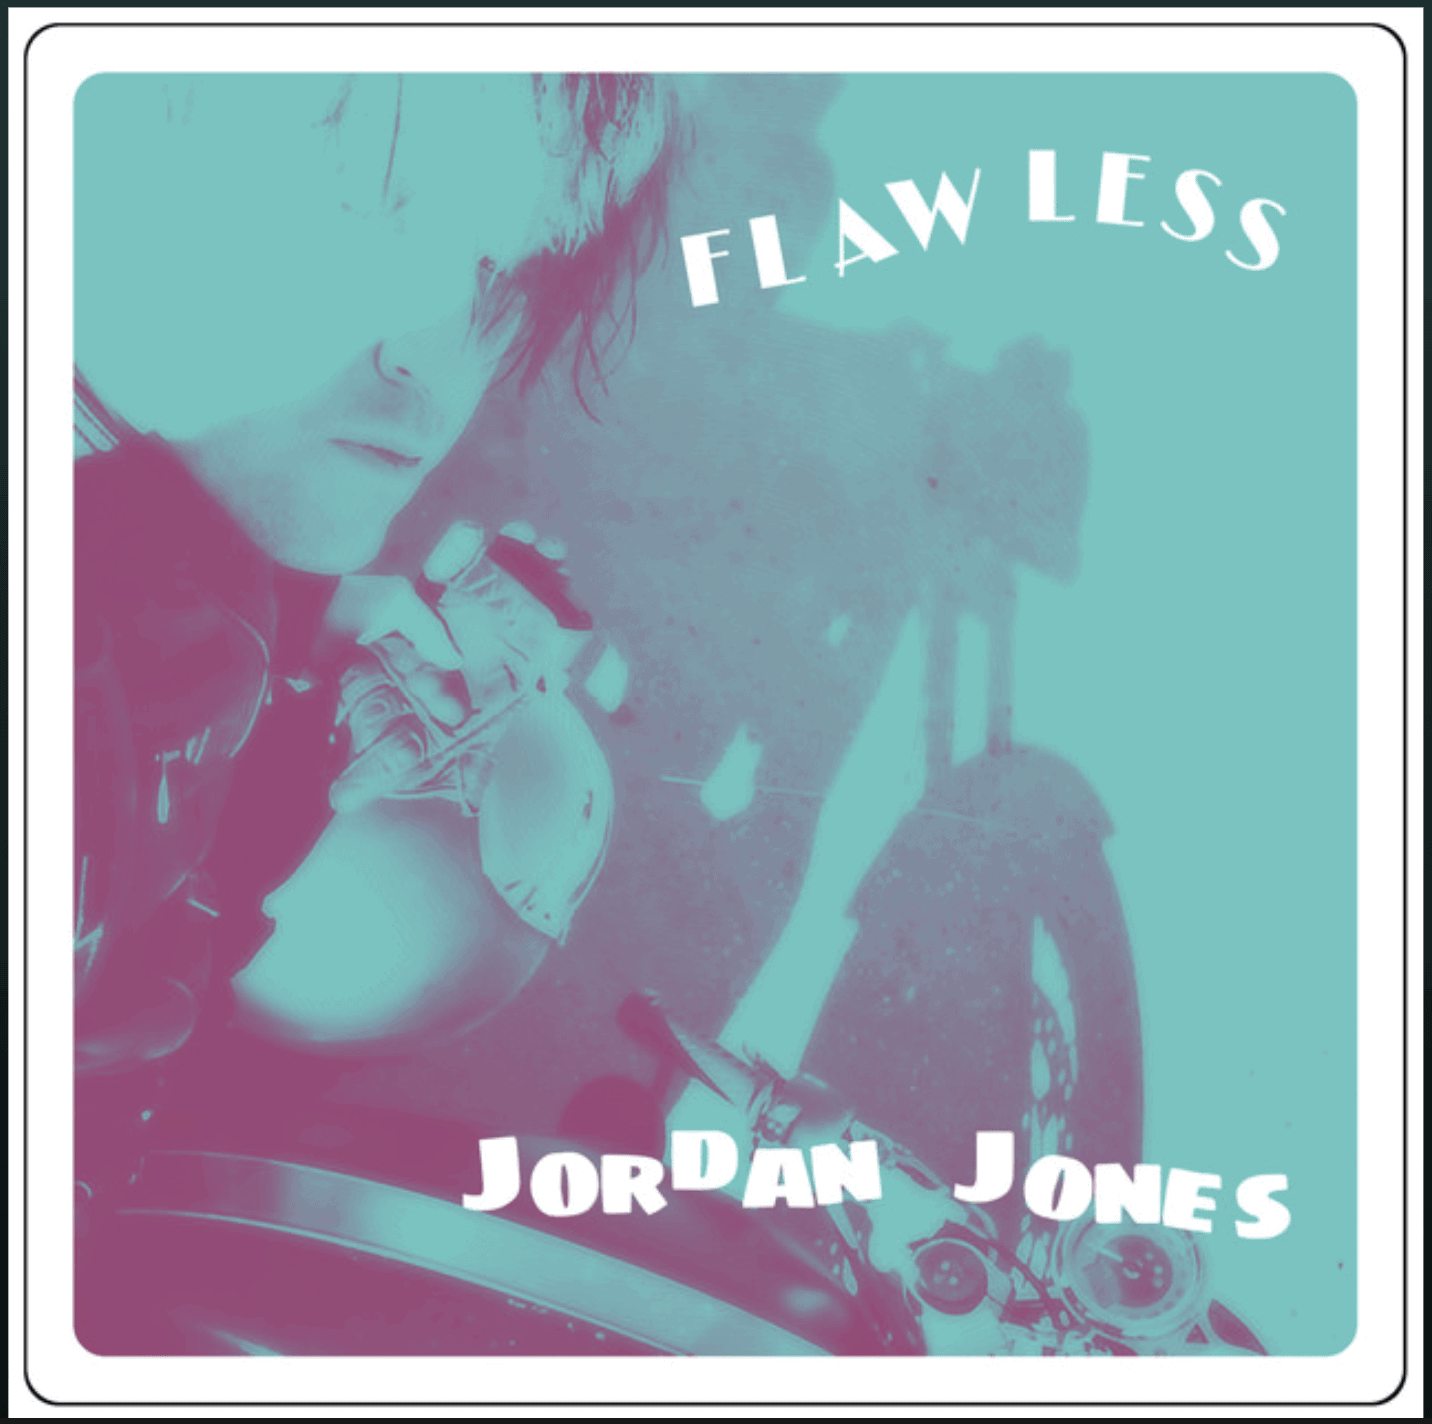 Flawless (Original Single) by Jordan Jones